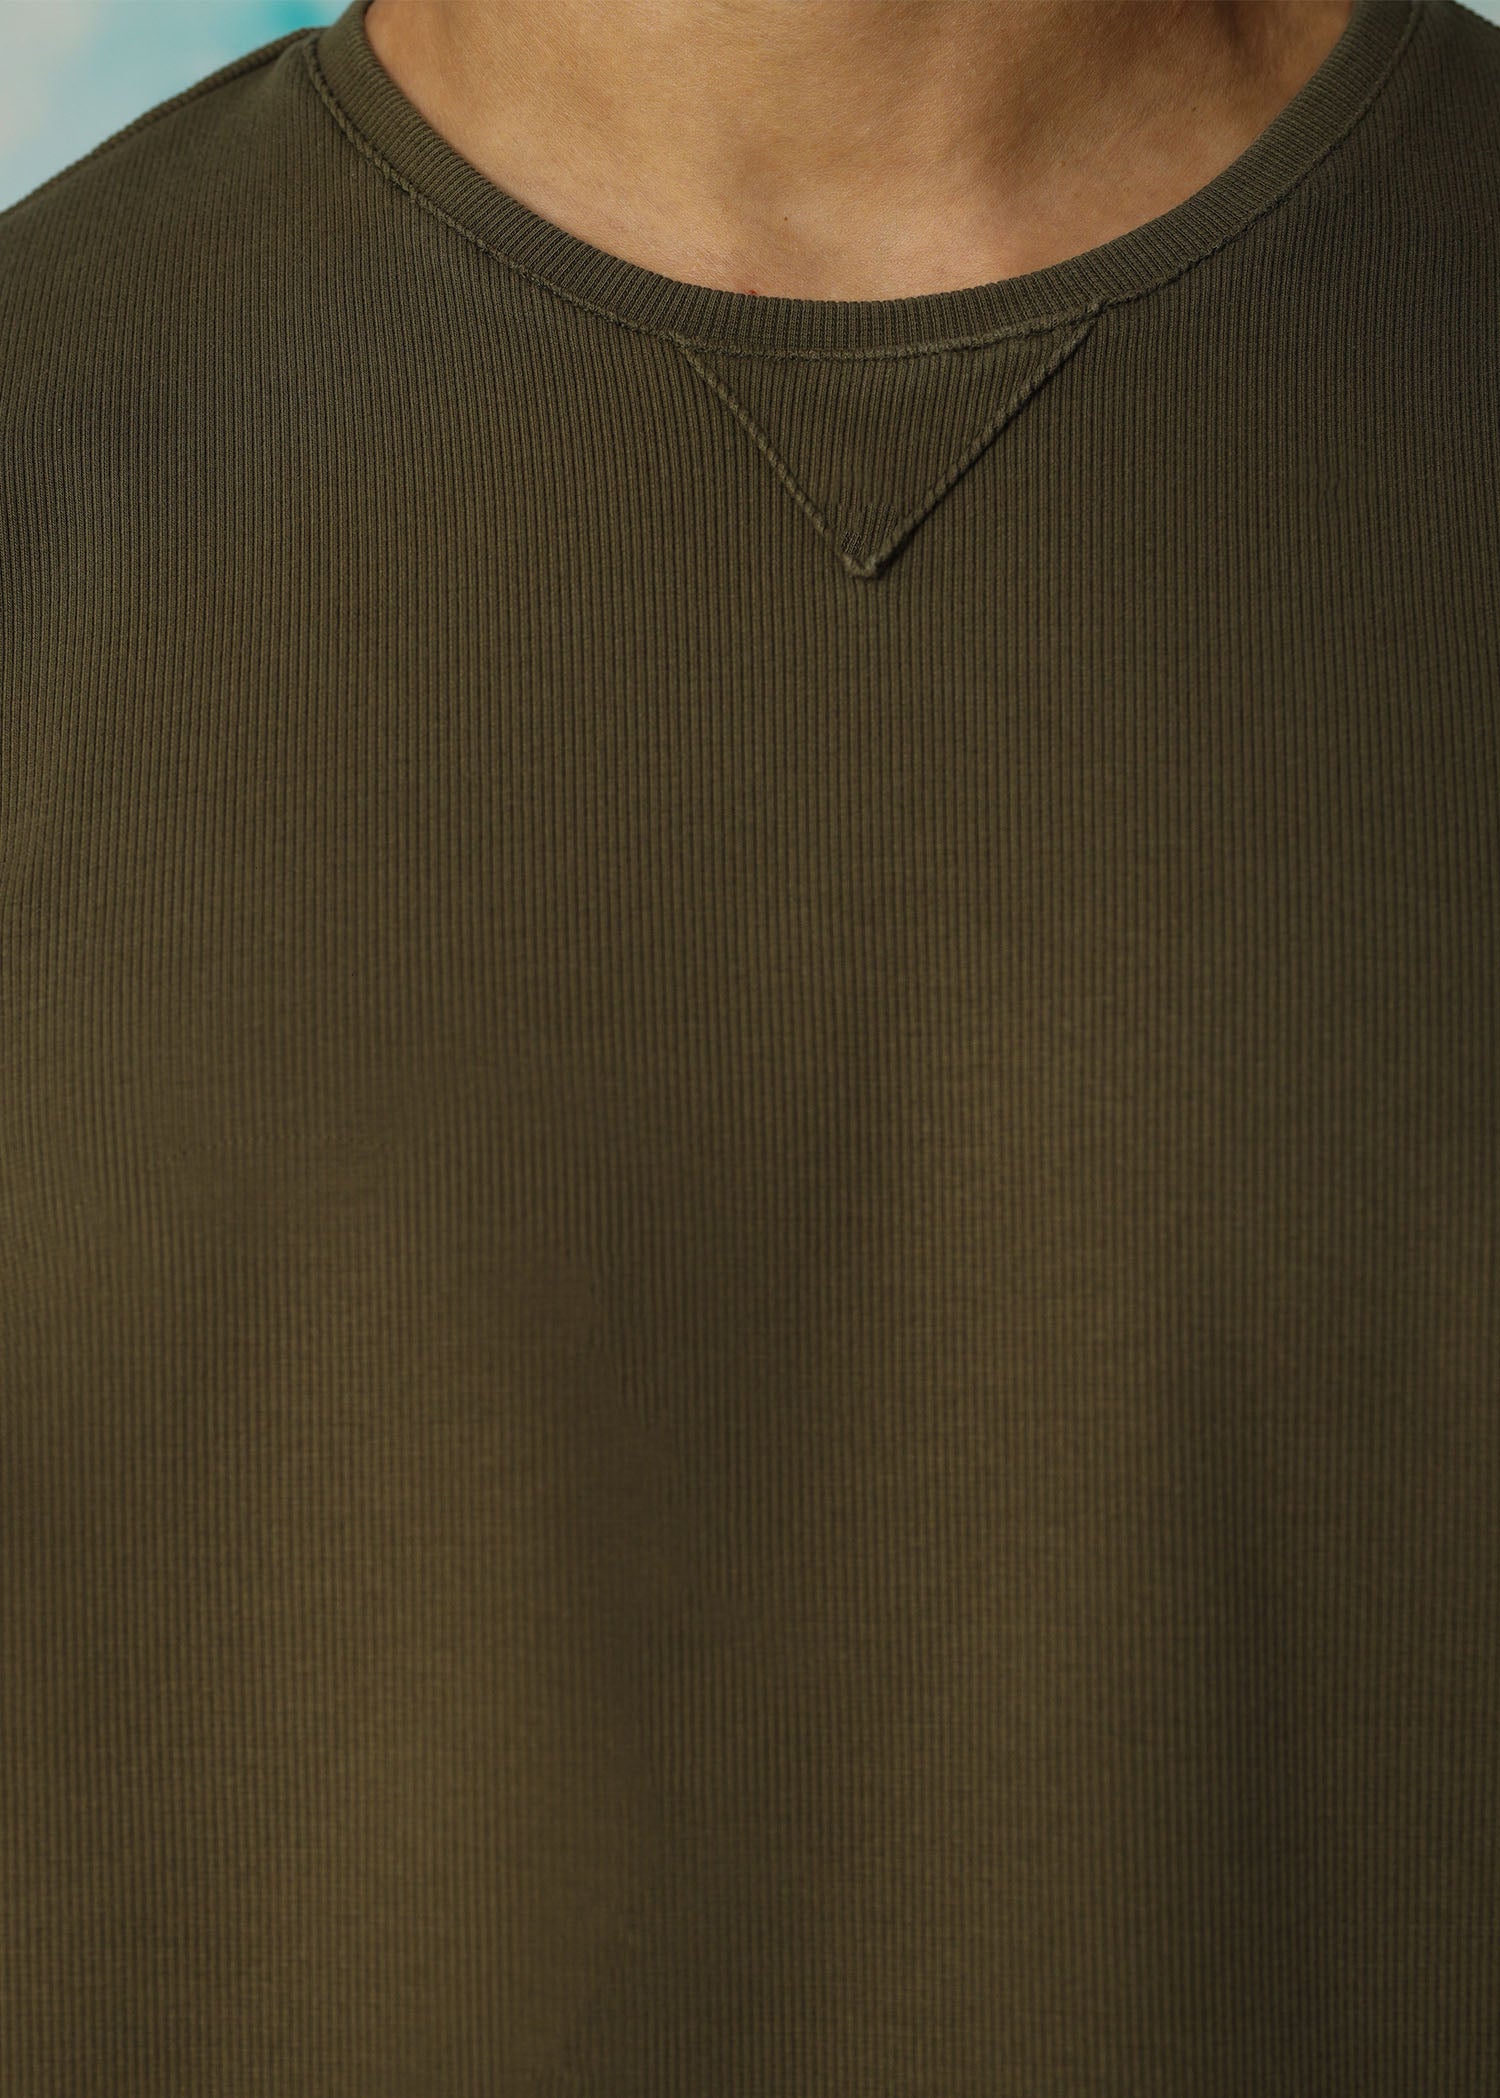 Sweatshirt L/S (Deep Olive)